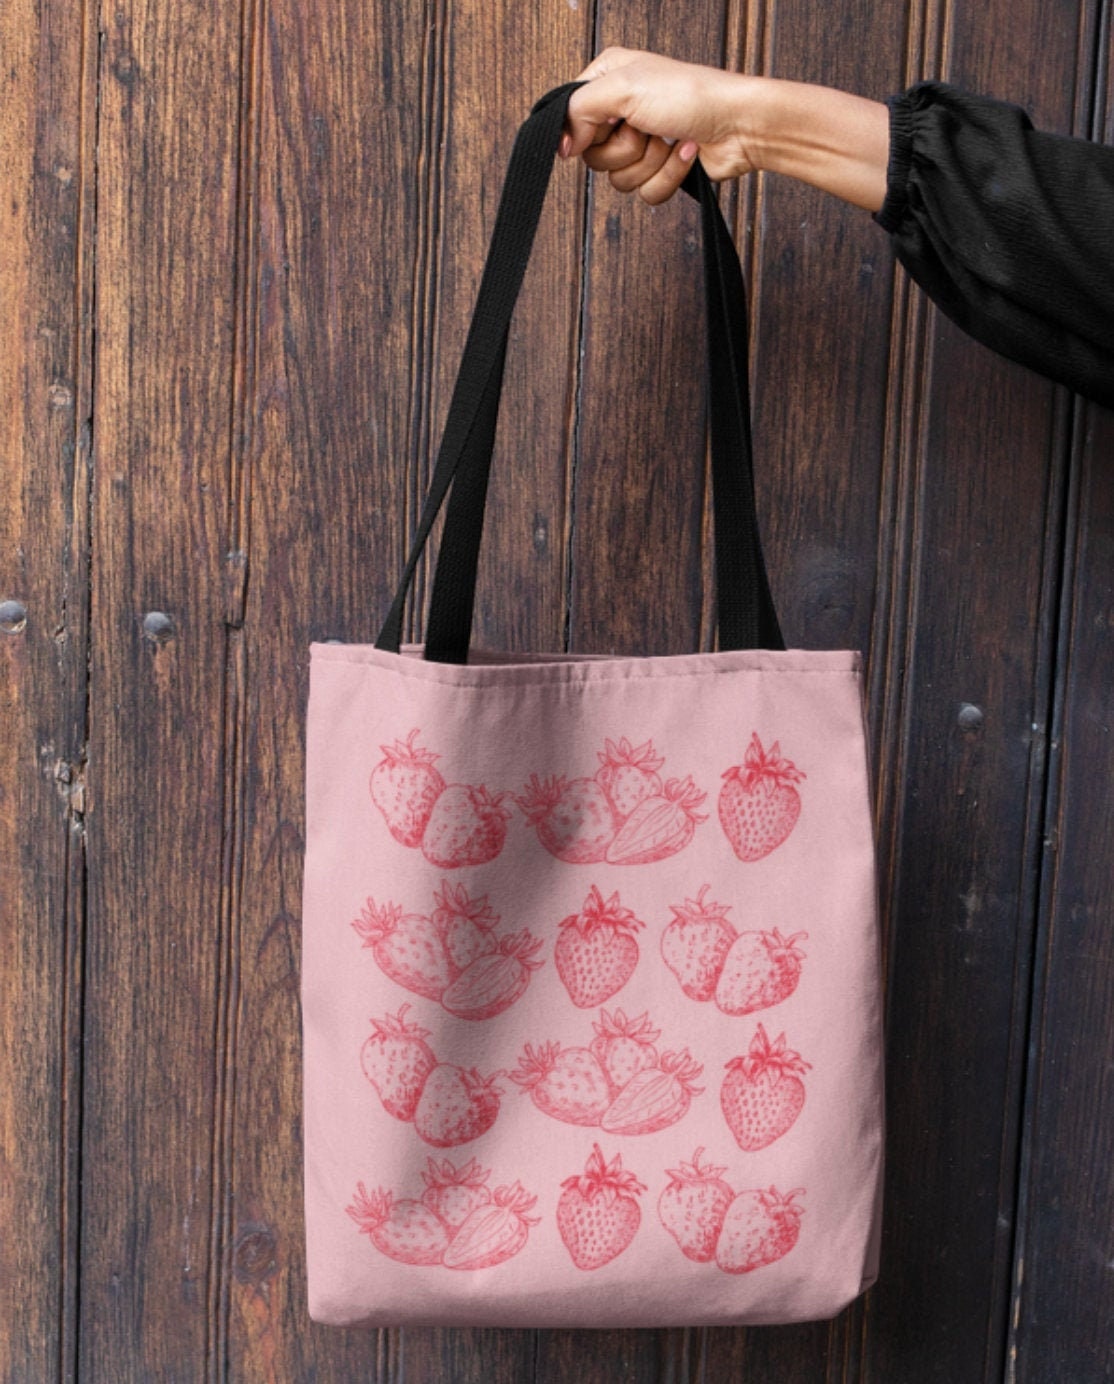 Pink color🌸💟 | Bags, Girly bags, Kawaii bags